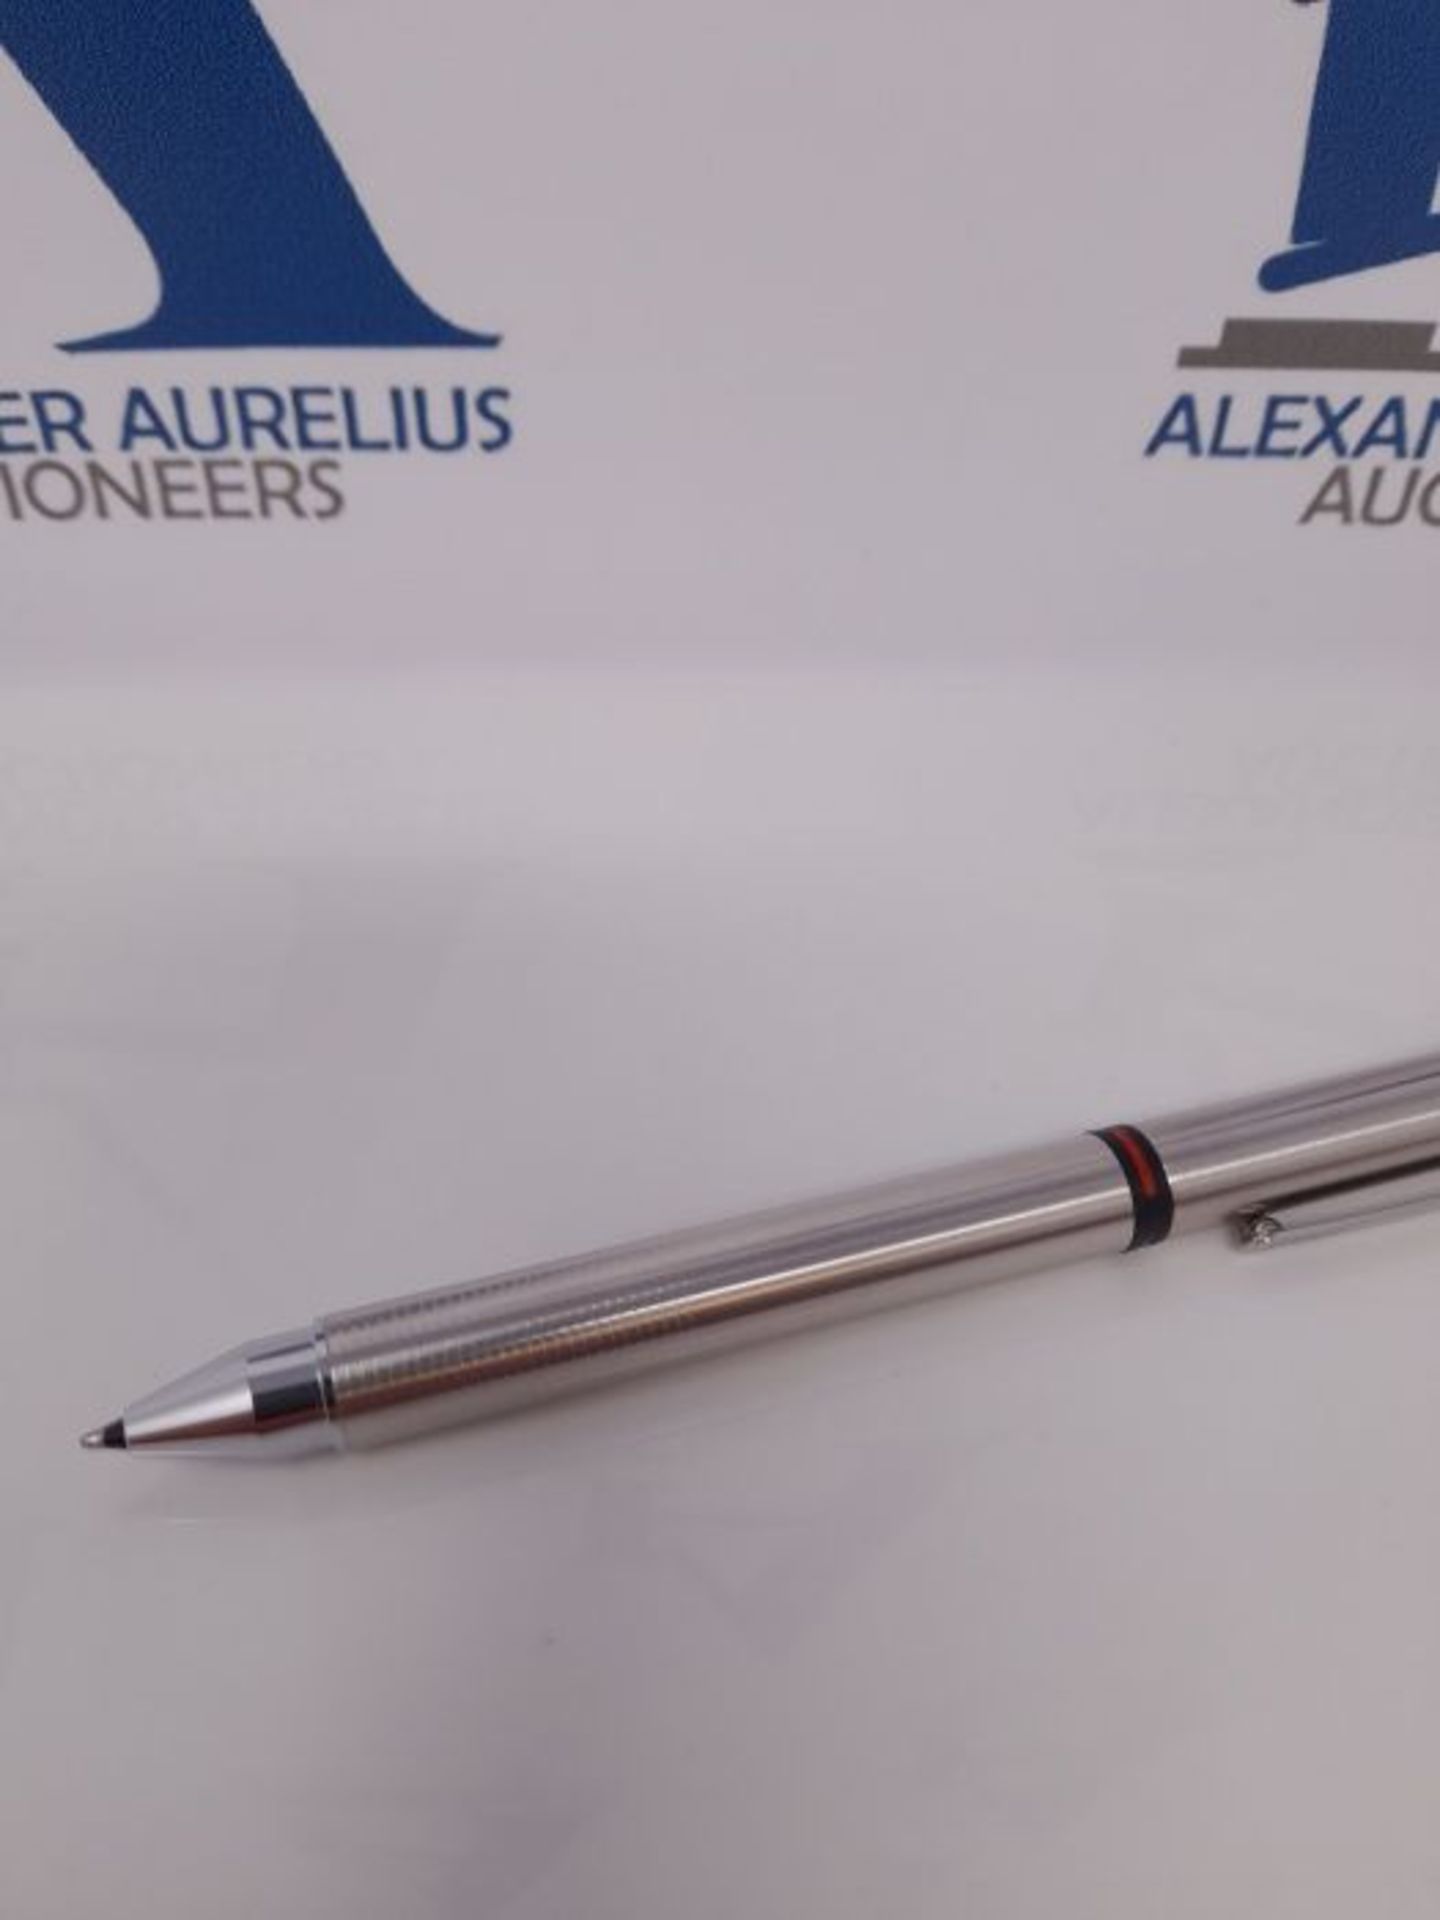 LAMY ST TRI PEN 745 Multi-System Ballpoint Pen Stainless Steel with Ballpoint Pen Refi - Image 3 of 3